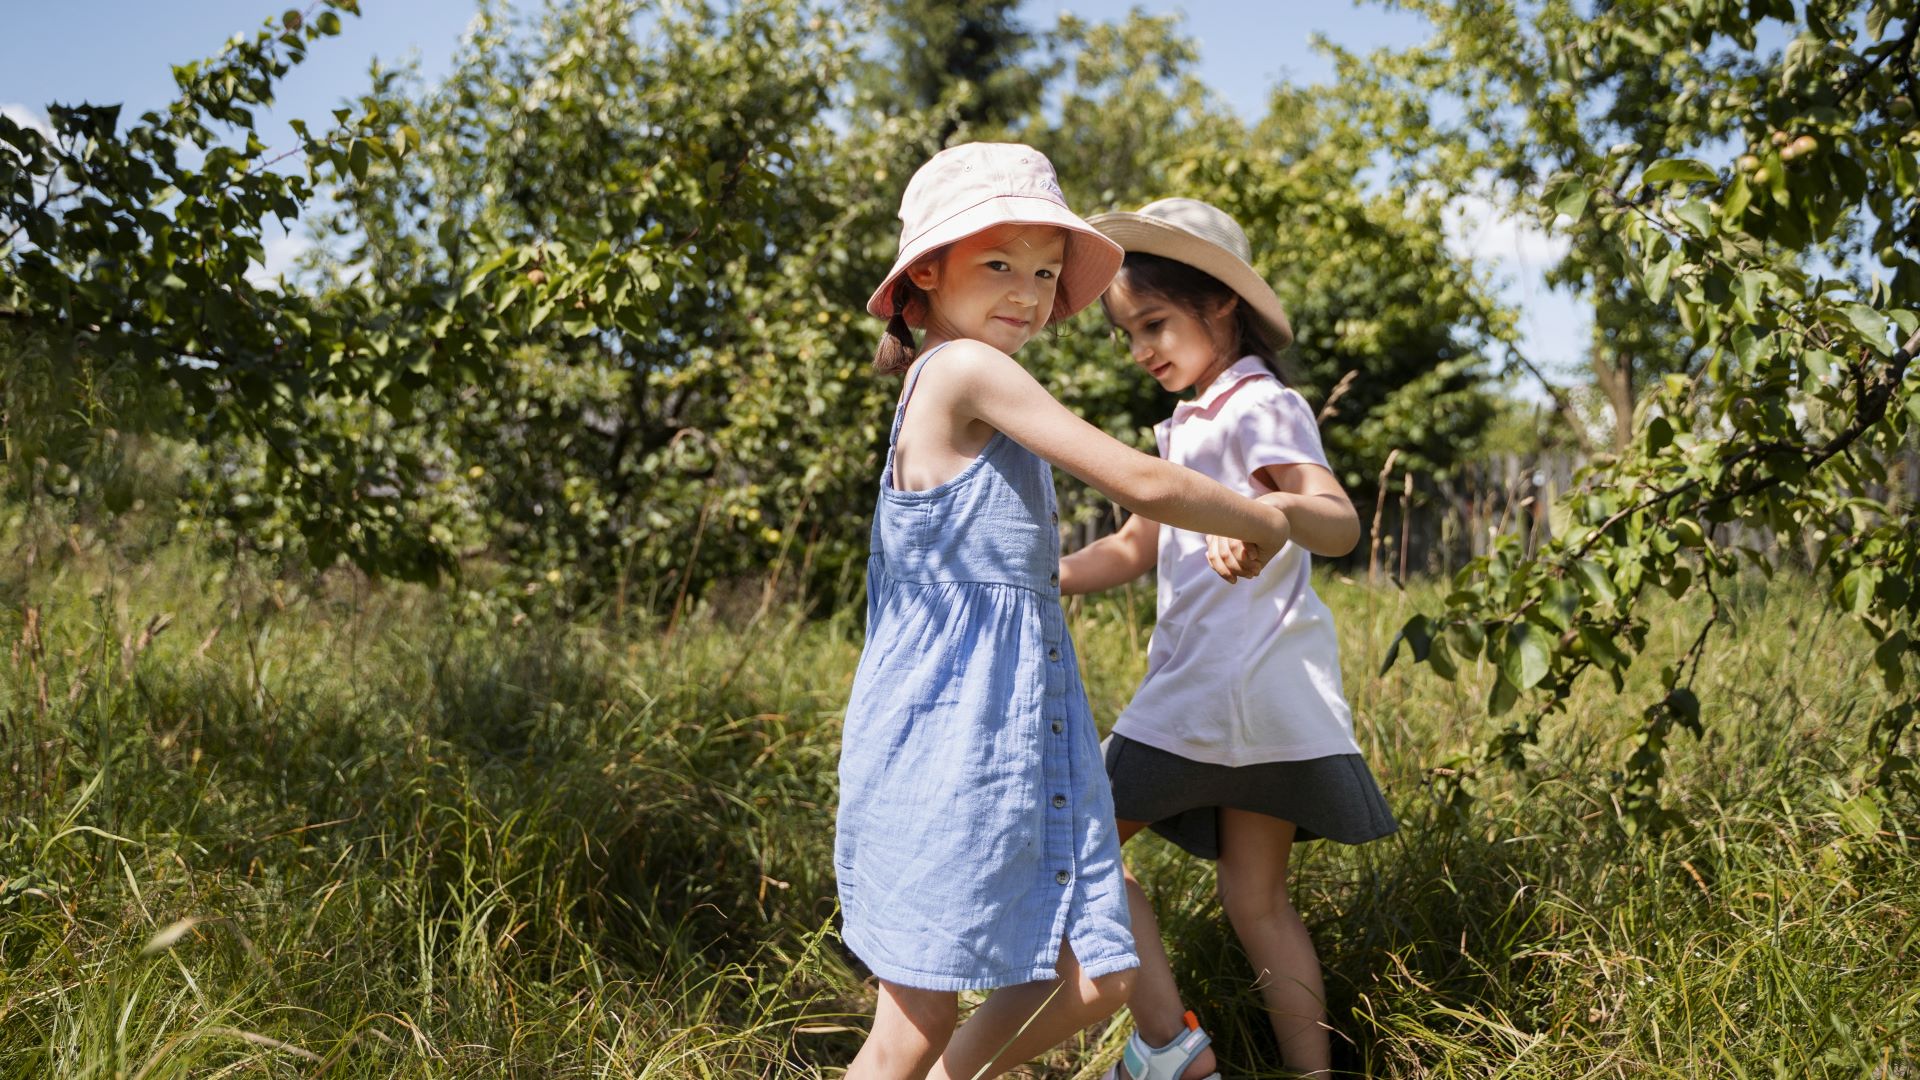 kids spending time outdoors rural area enjoying childhood